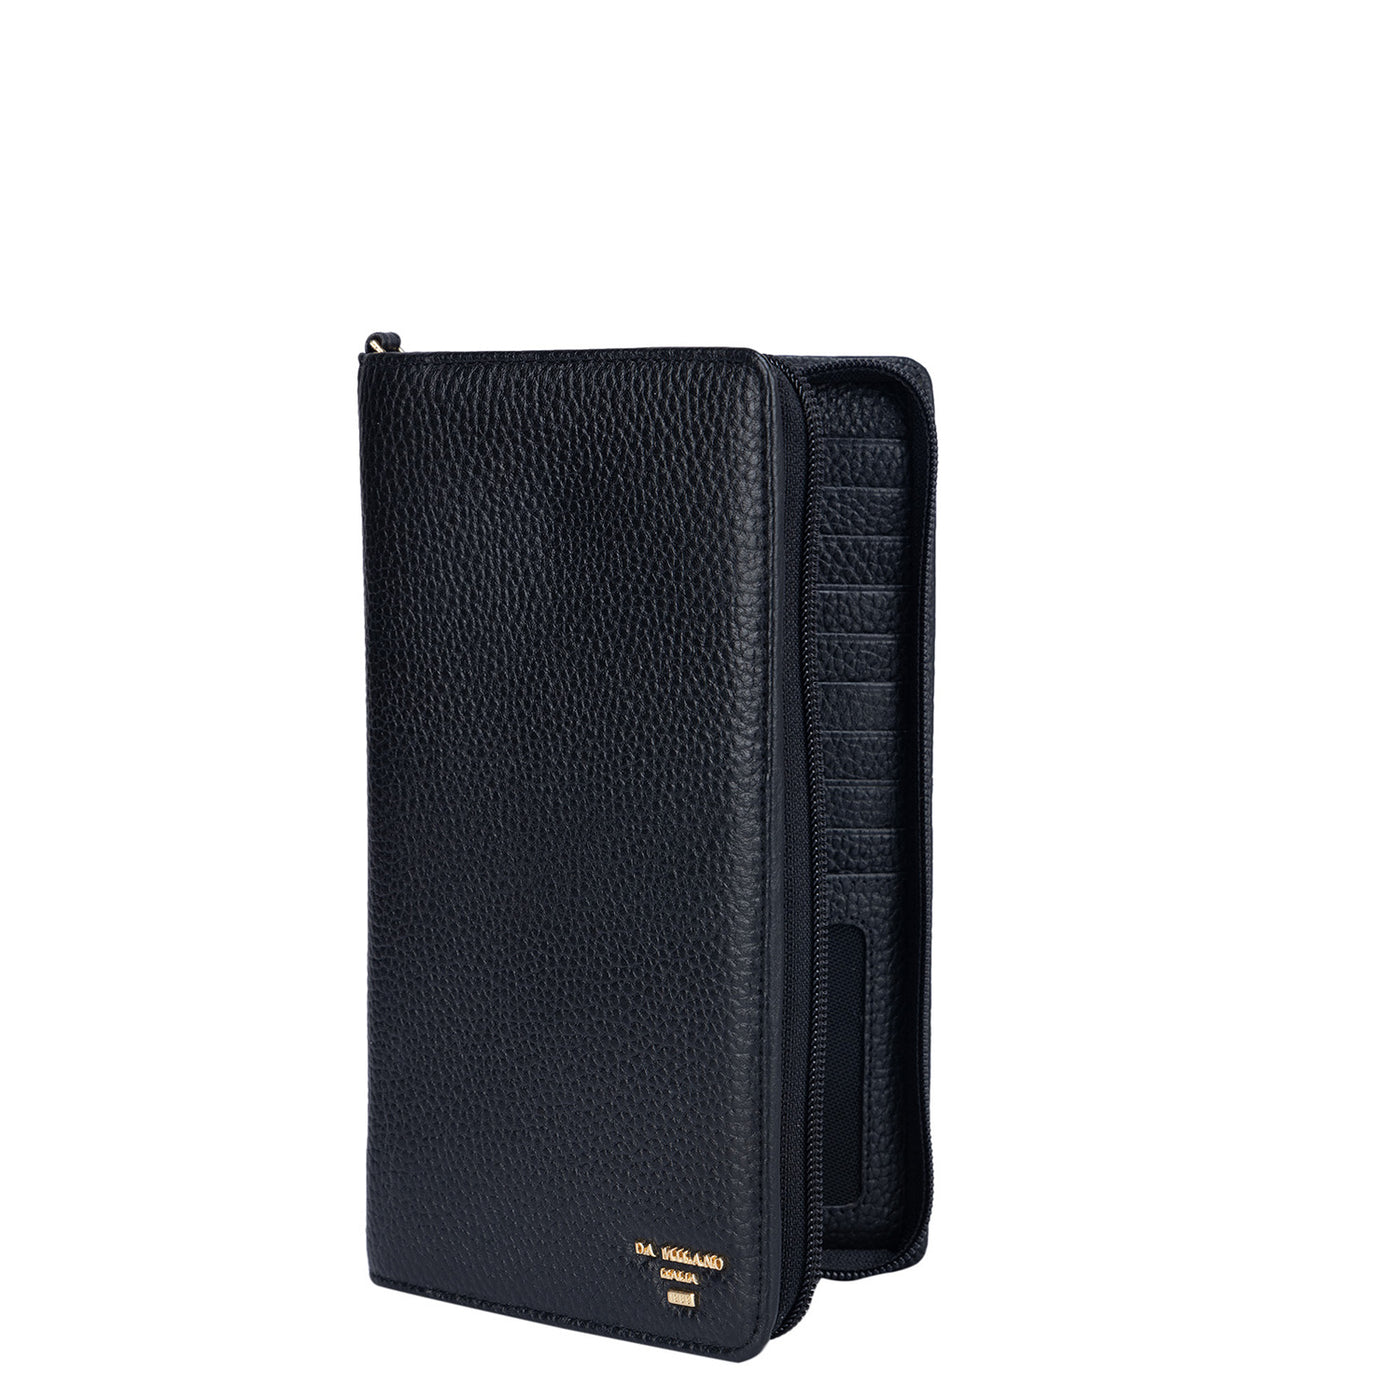 Wax Leather Passport Case - Black